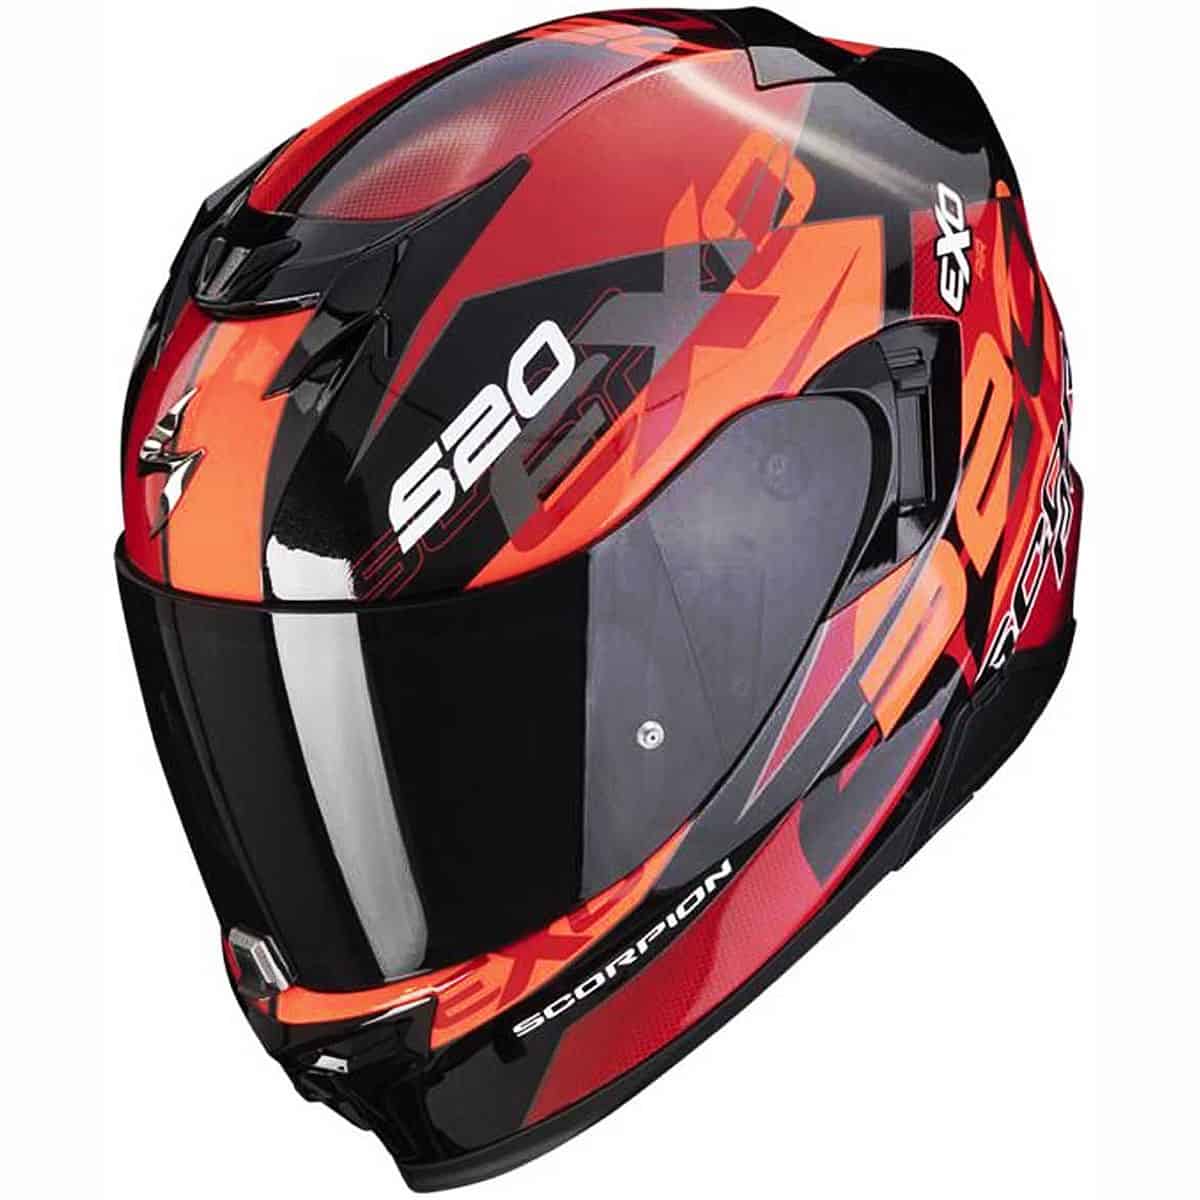 Scorpion Exo-520 Helmet Cover Graphic Details